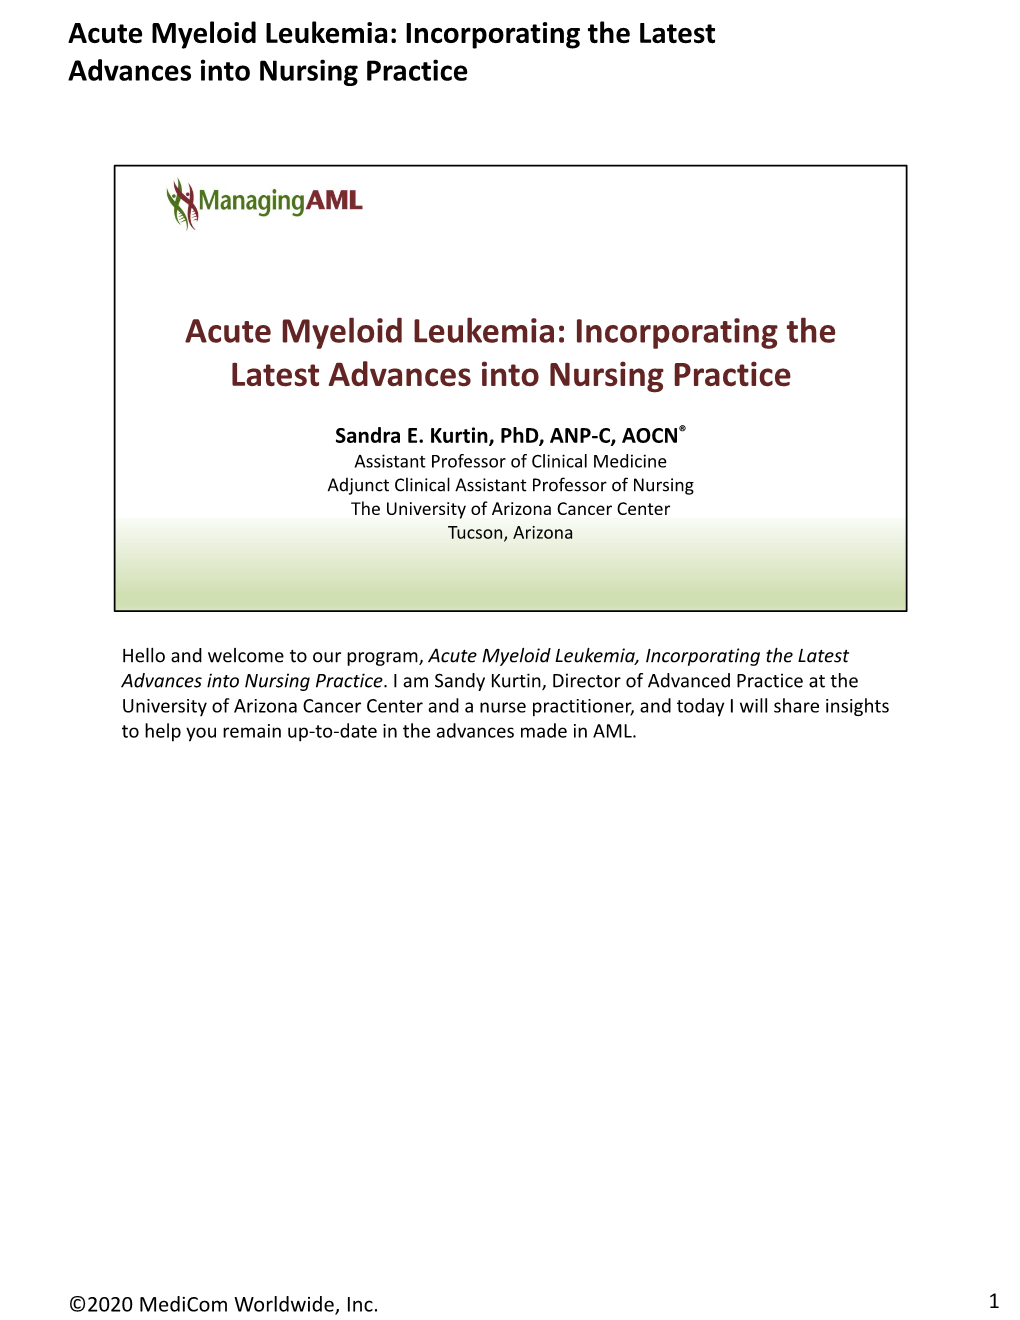 Acute Myeloid Leukemia: Incorporating the Latest Advances Into Nursing Practice